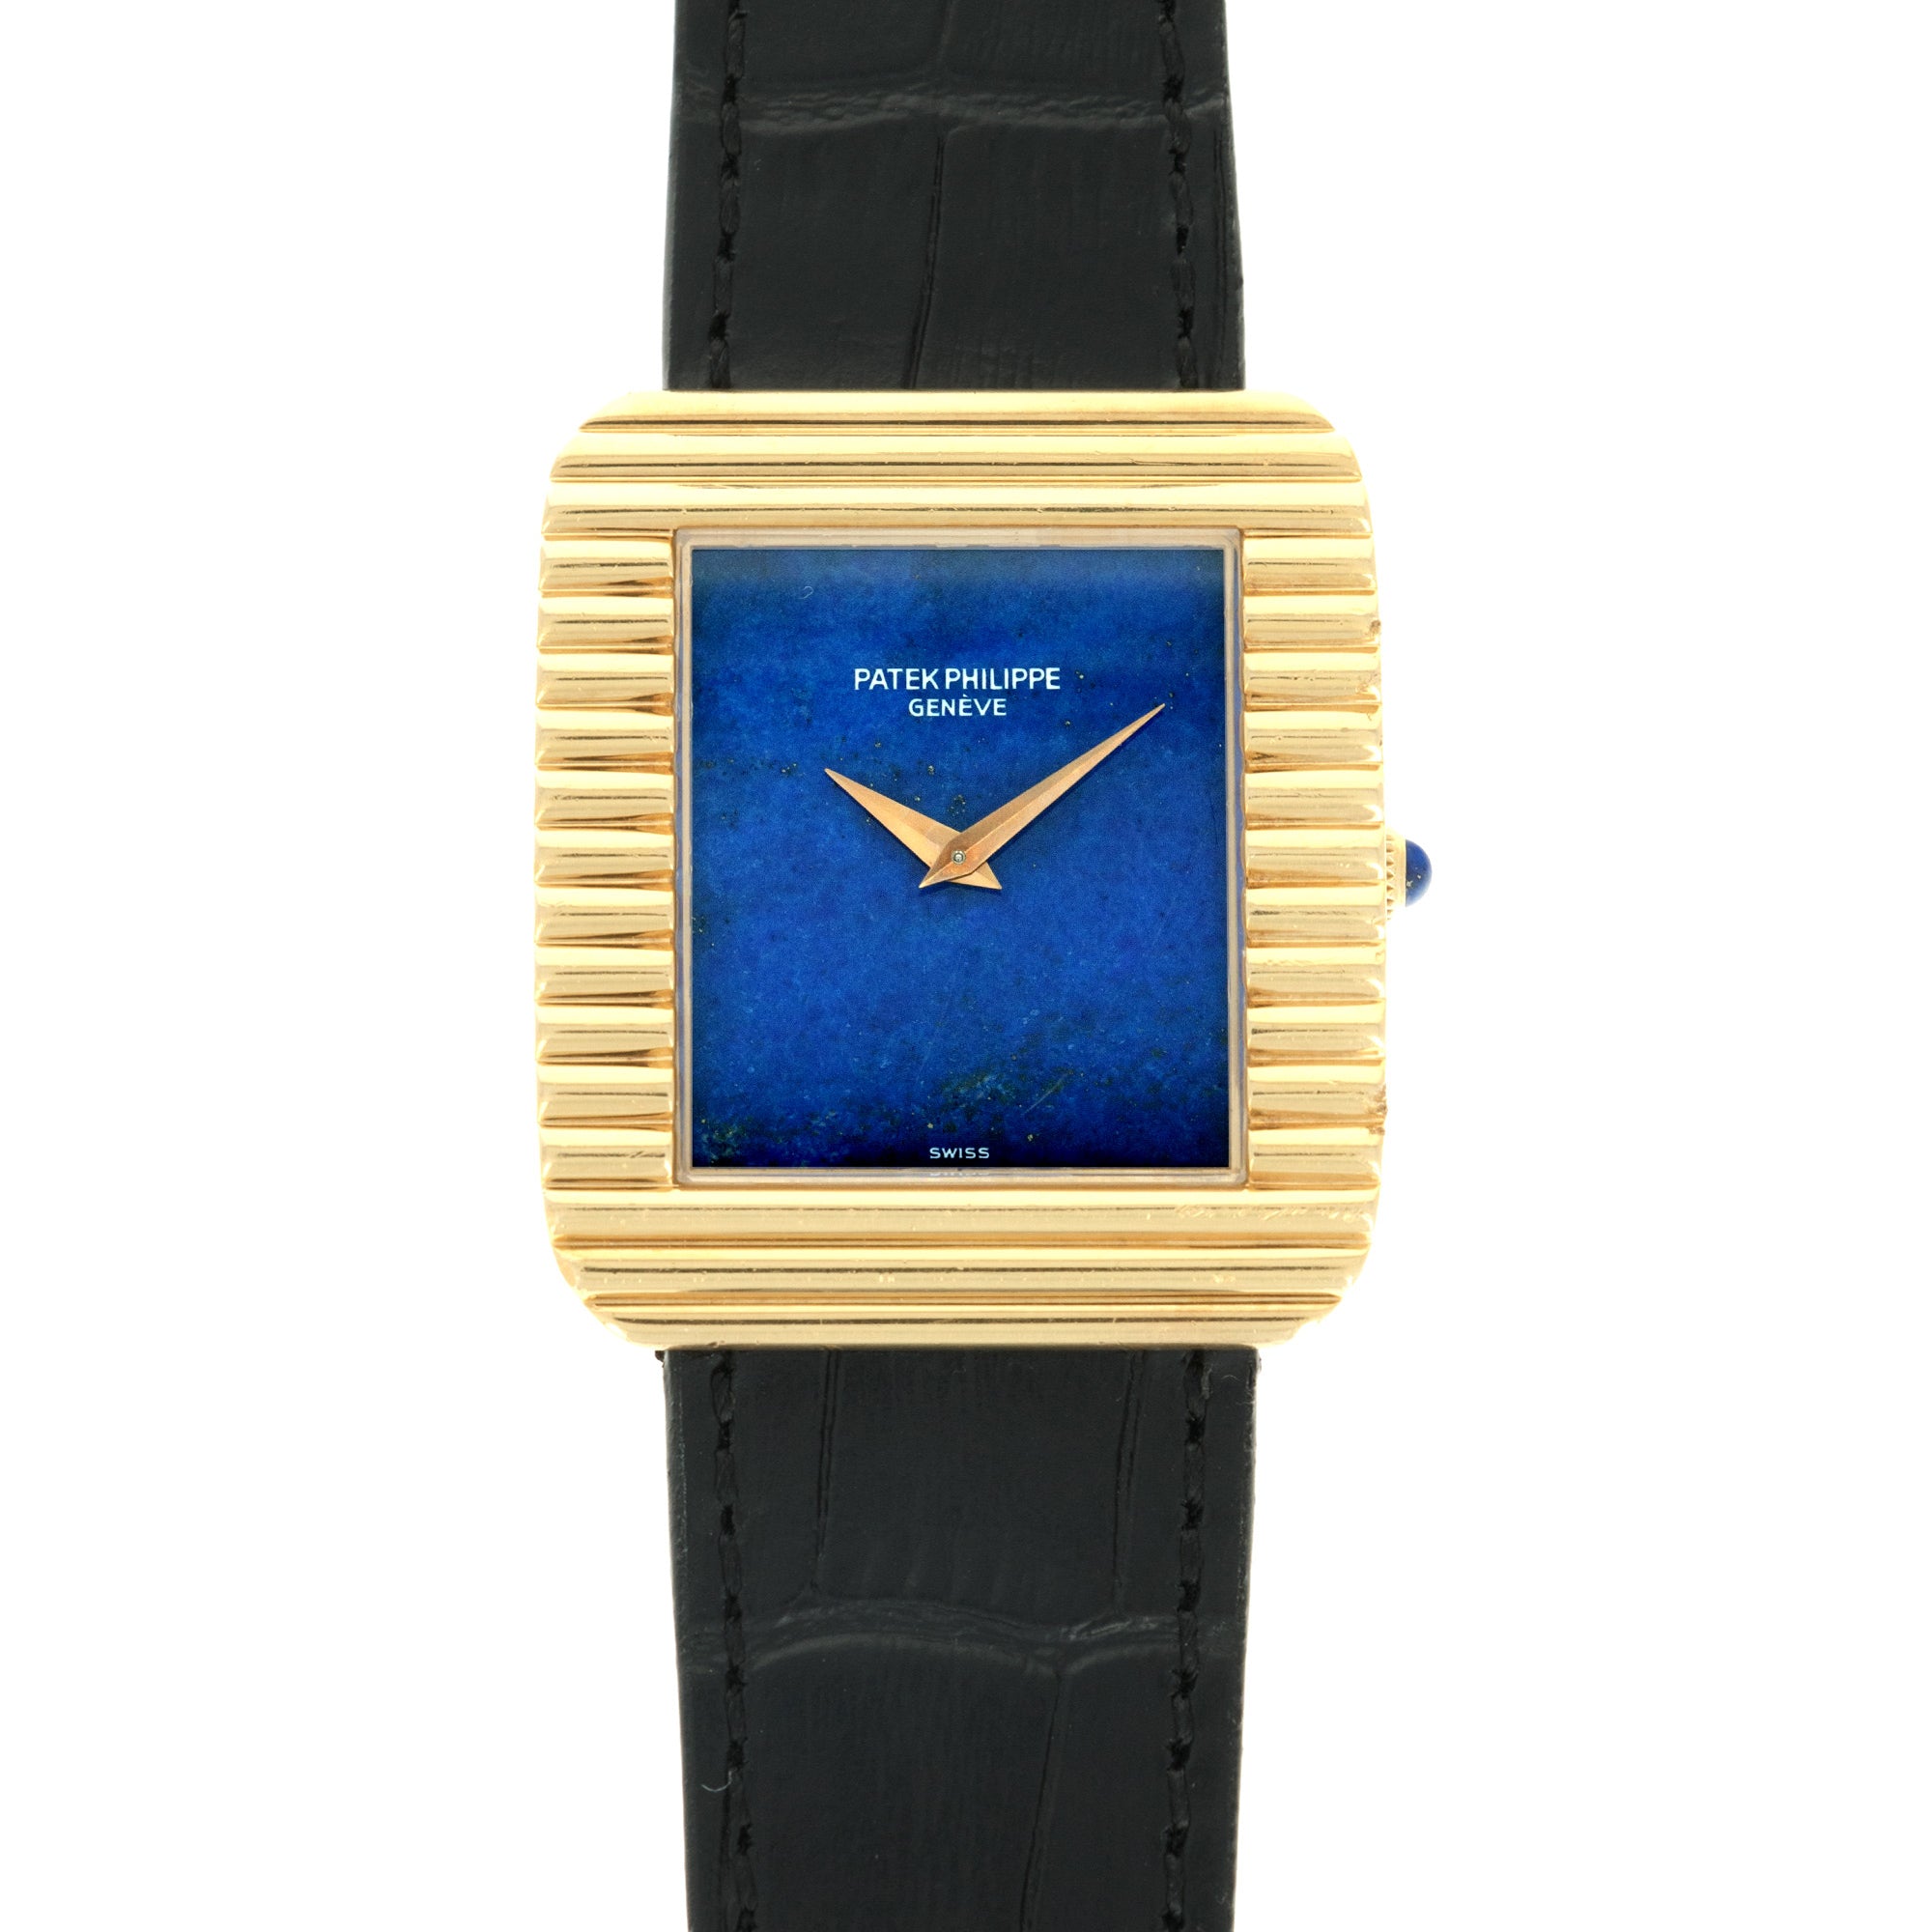 Patek Philippe - Patek Philippe Yellow Gold Lapis Watch Ref. 3733 - The Keystone Watches